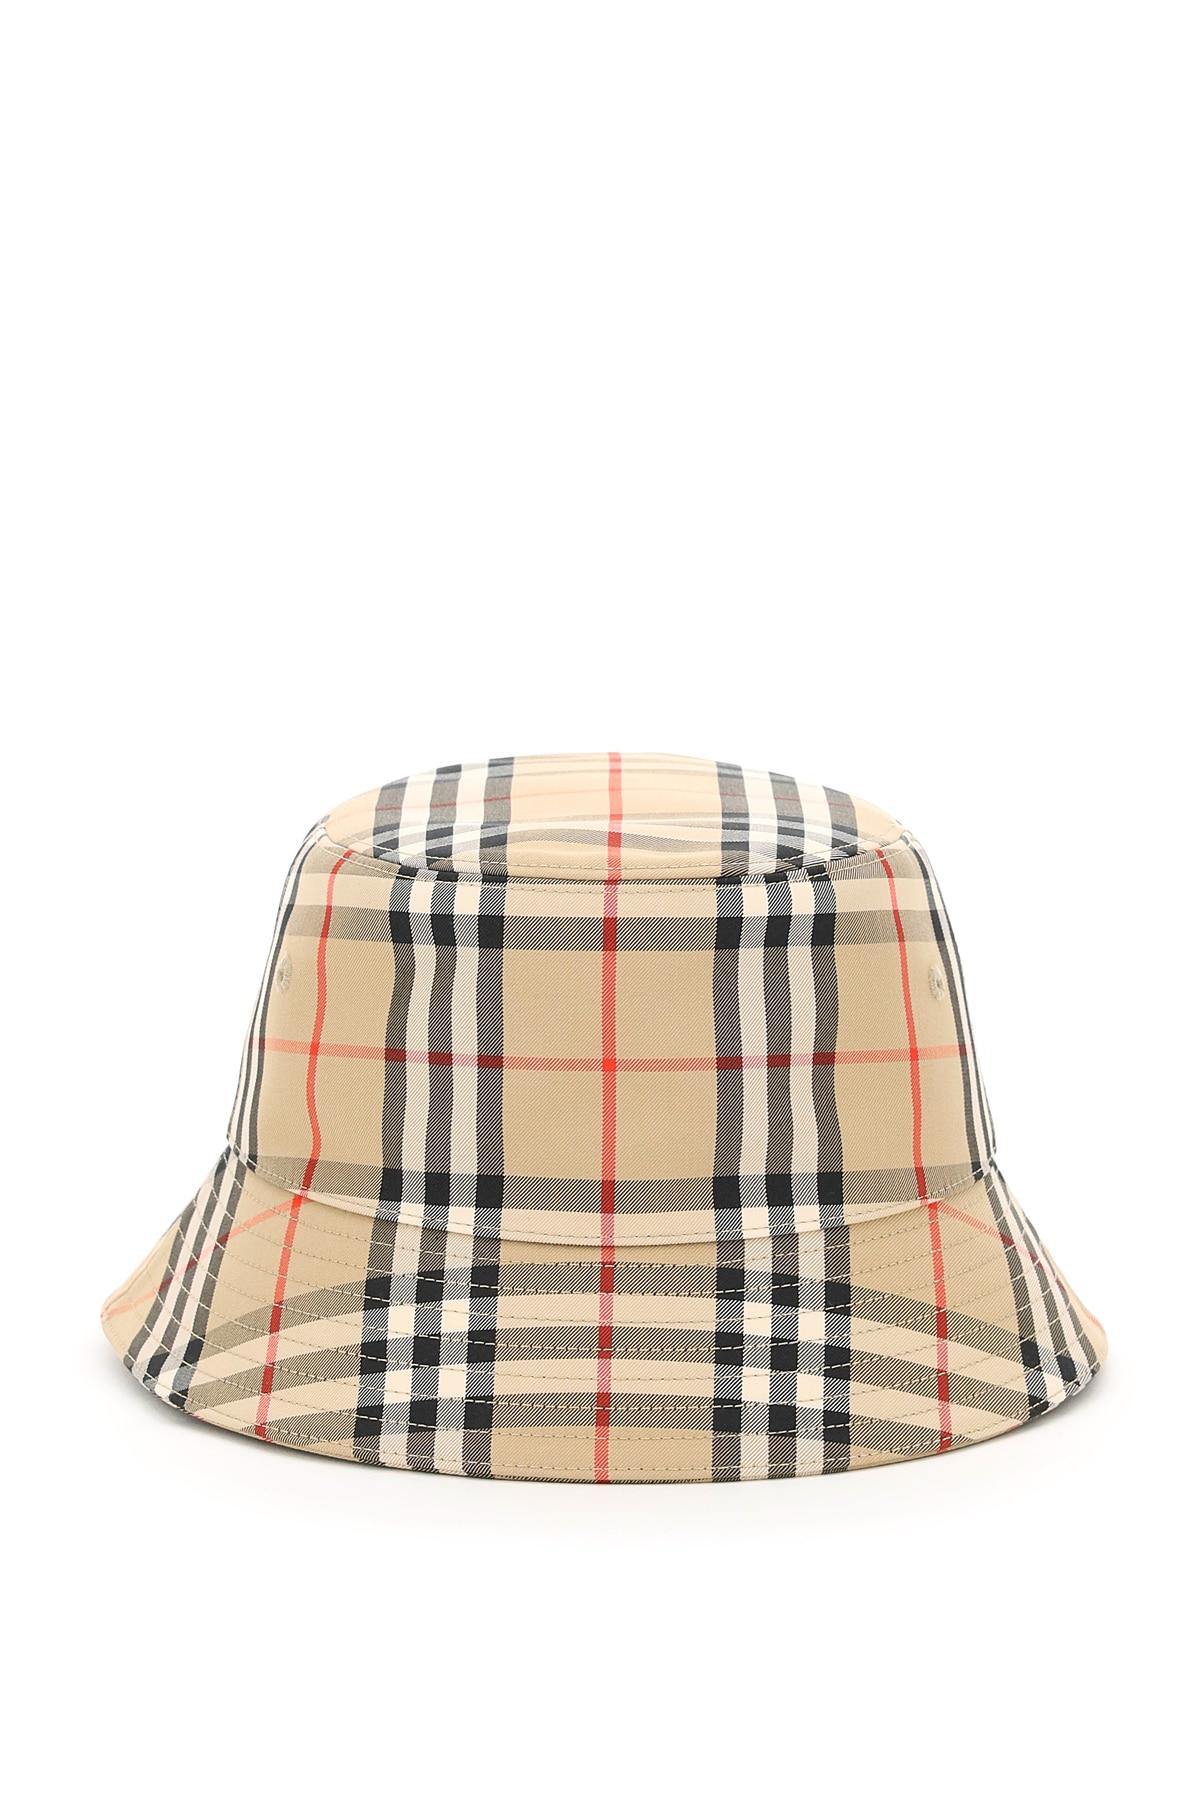 Burberry Tartan Bucket Hat in Natural | Lyst